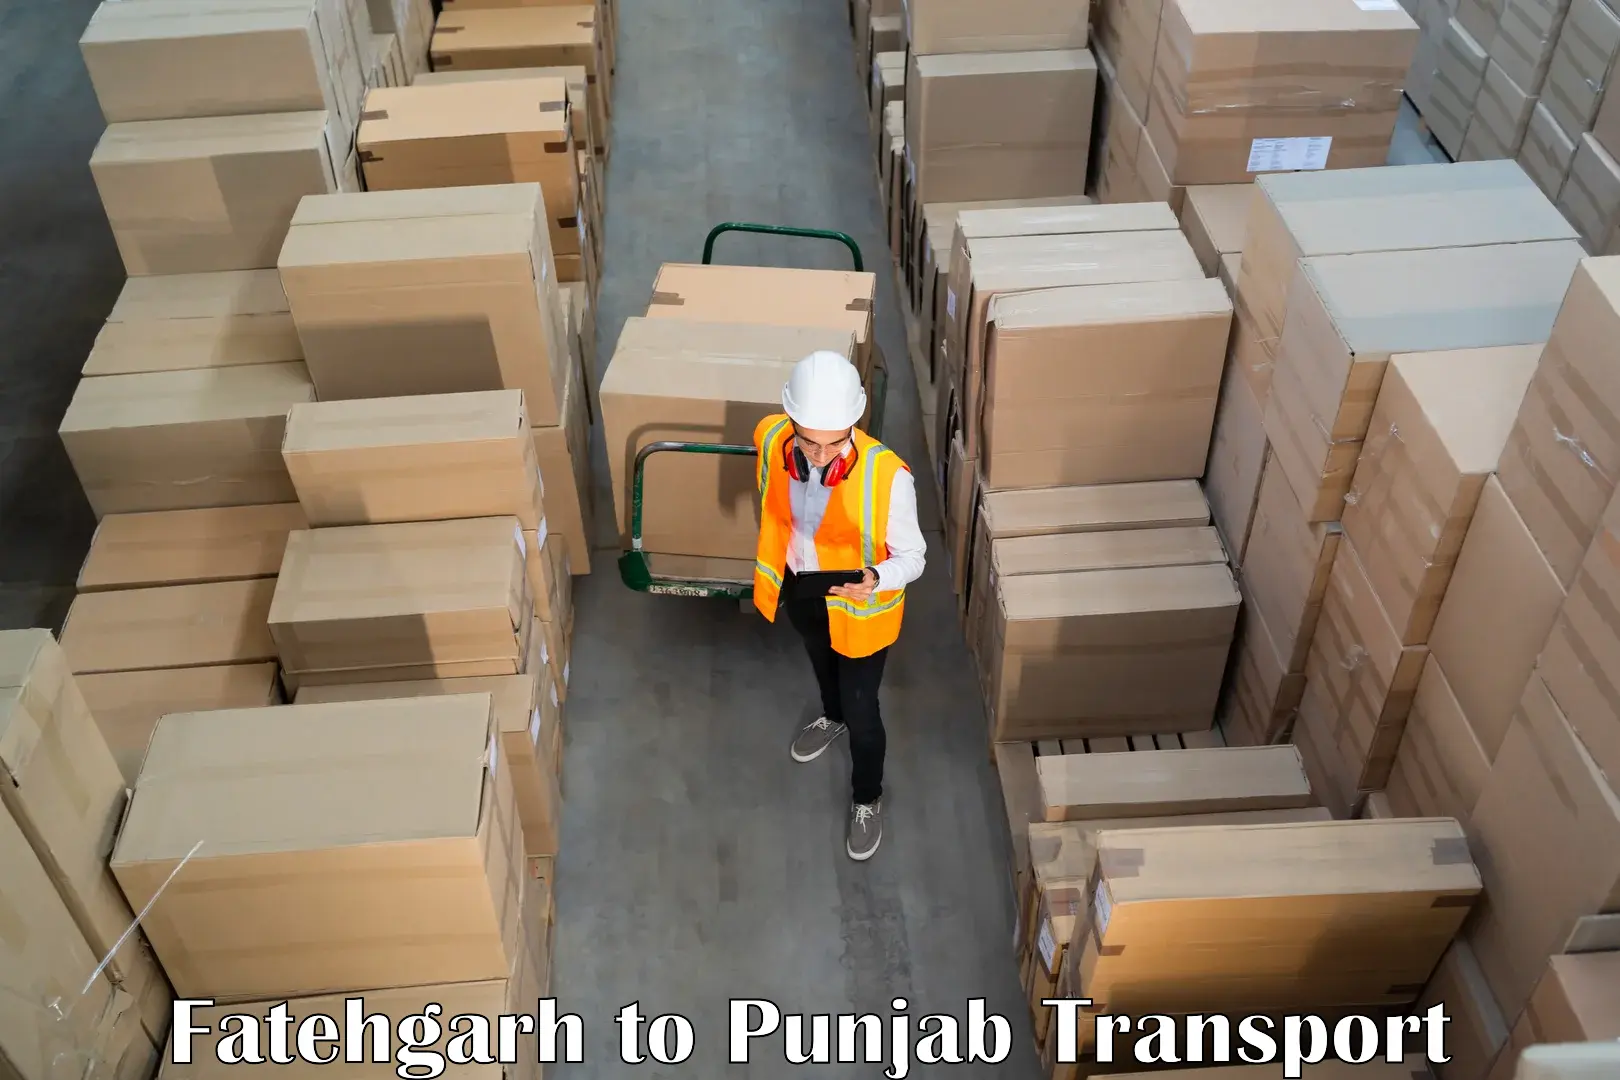 Transport in sharing in Fatehgarh to Jalandhar